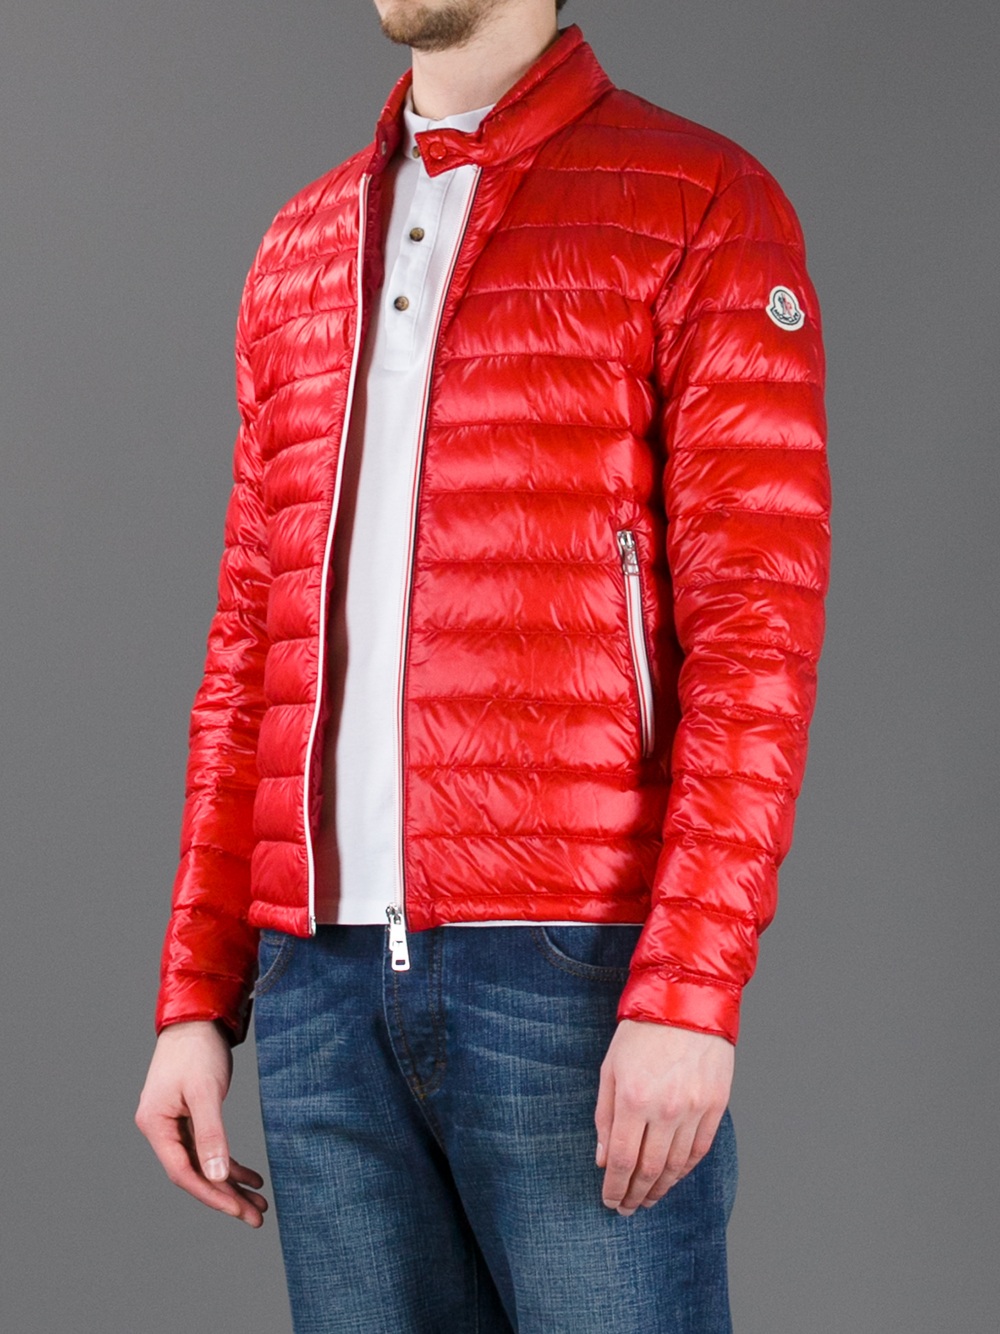 Lyst - Moncler Rigel Padded Jacket in Red for Men